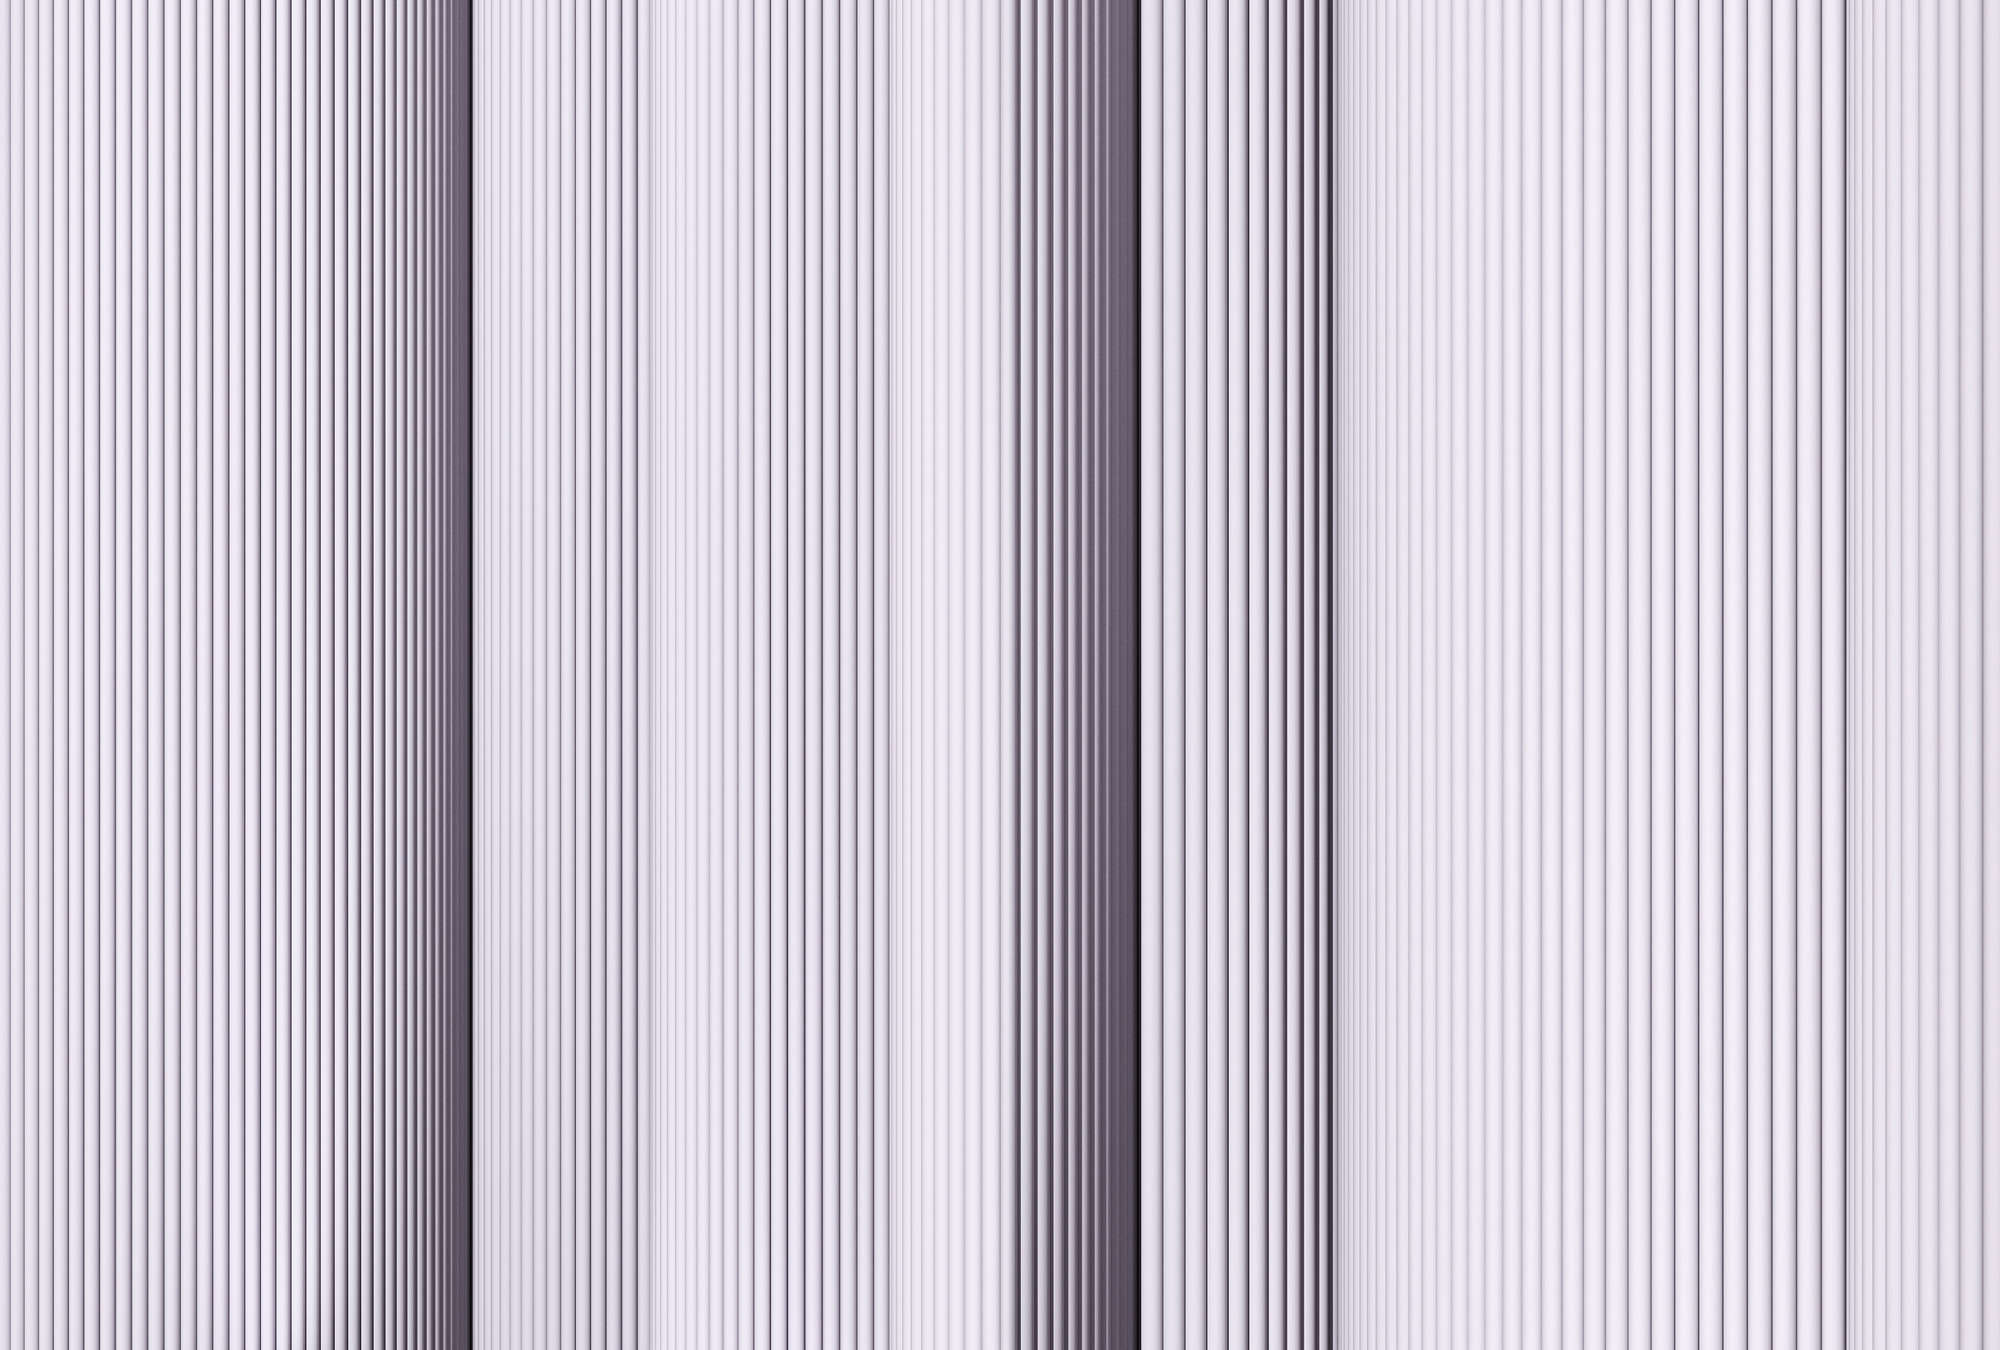             Magic Wall 1 - stripes photo wallpaper 3D illusion effect, purple & white
        